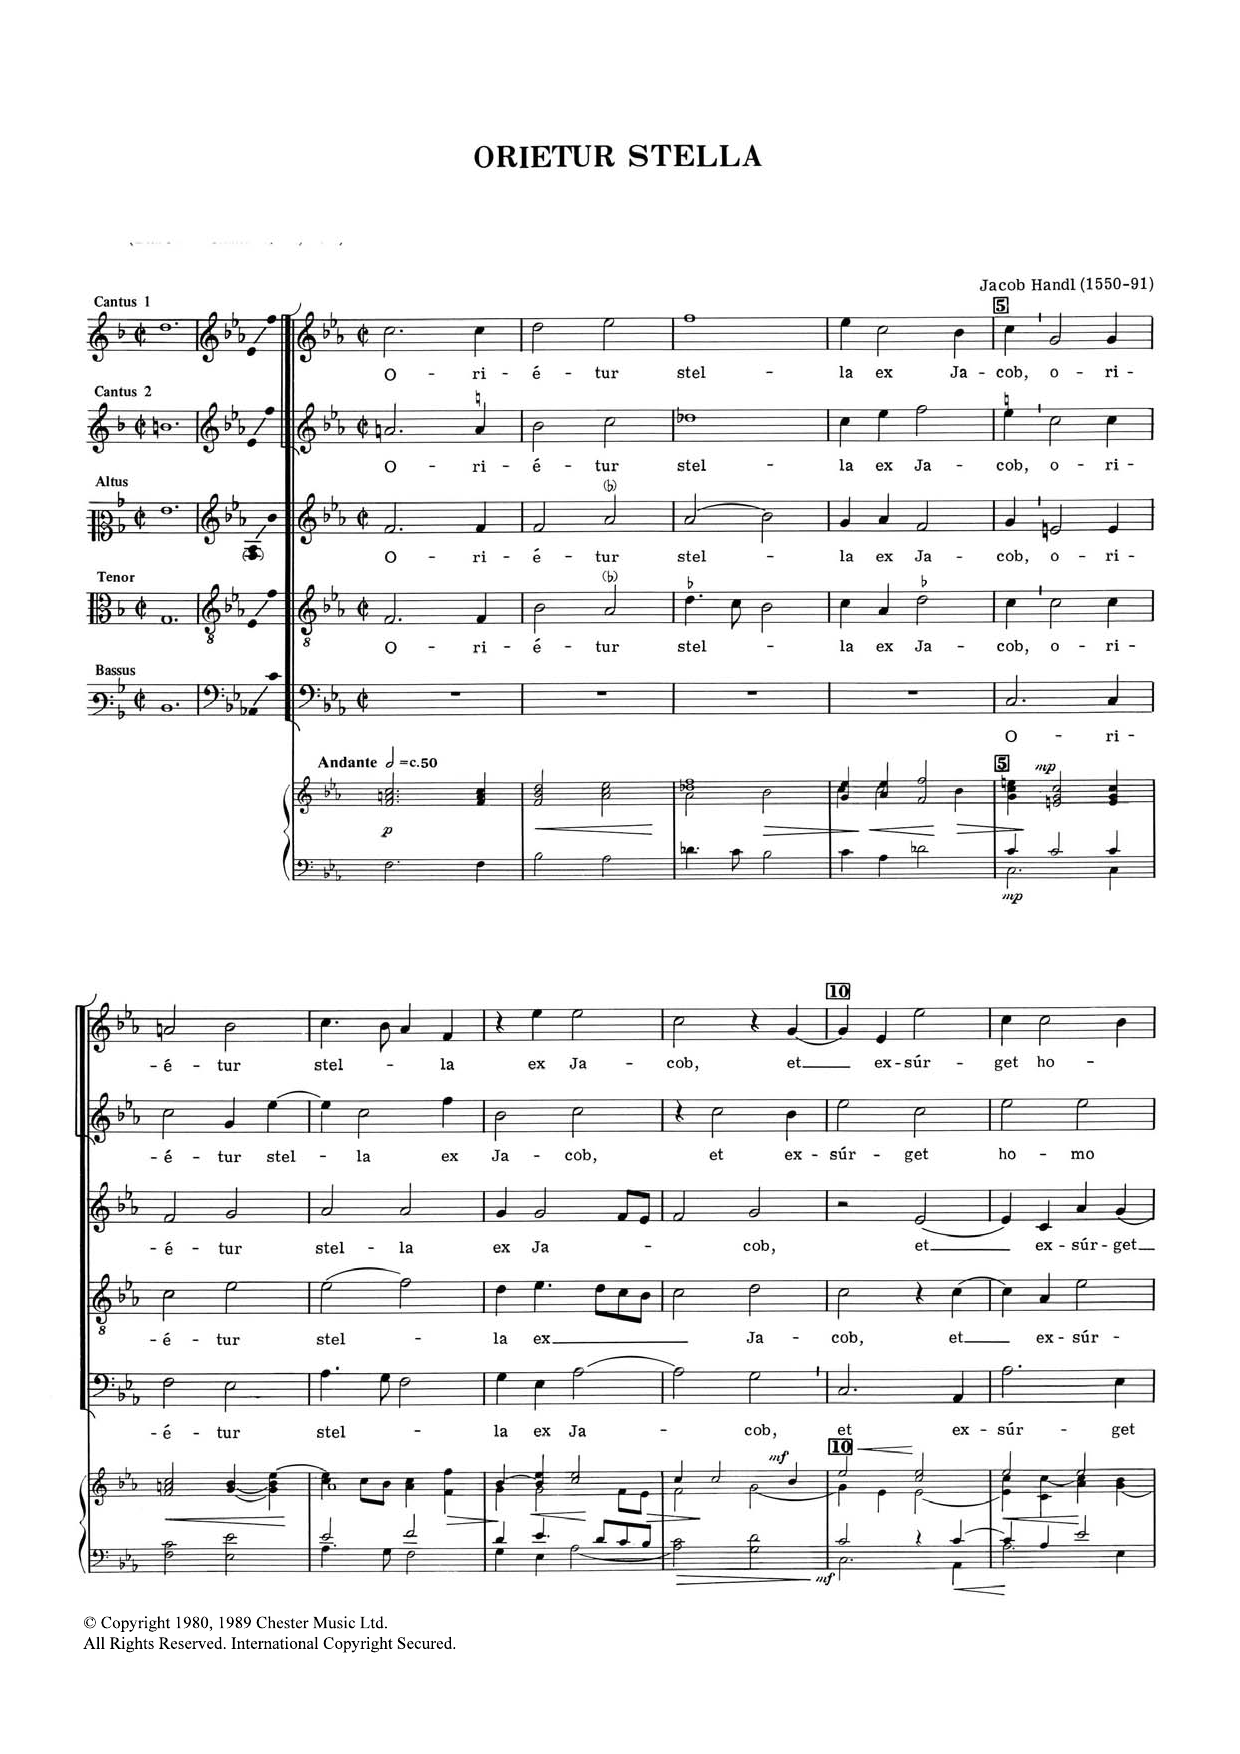 Jacob Handl Orietur Stella Sheet Music Notes & Chords for Choral SAATB - Download or Print PDF